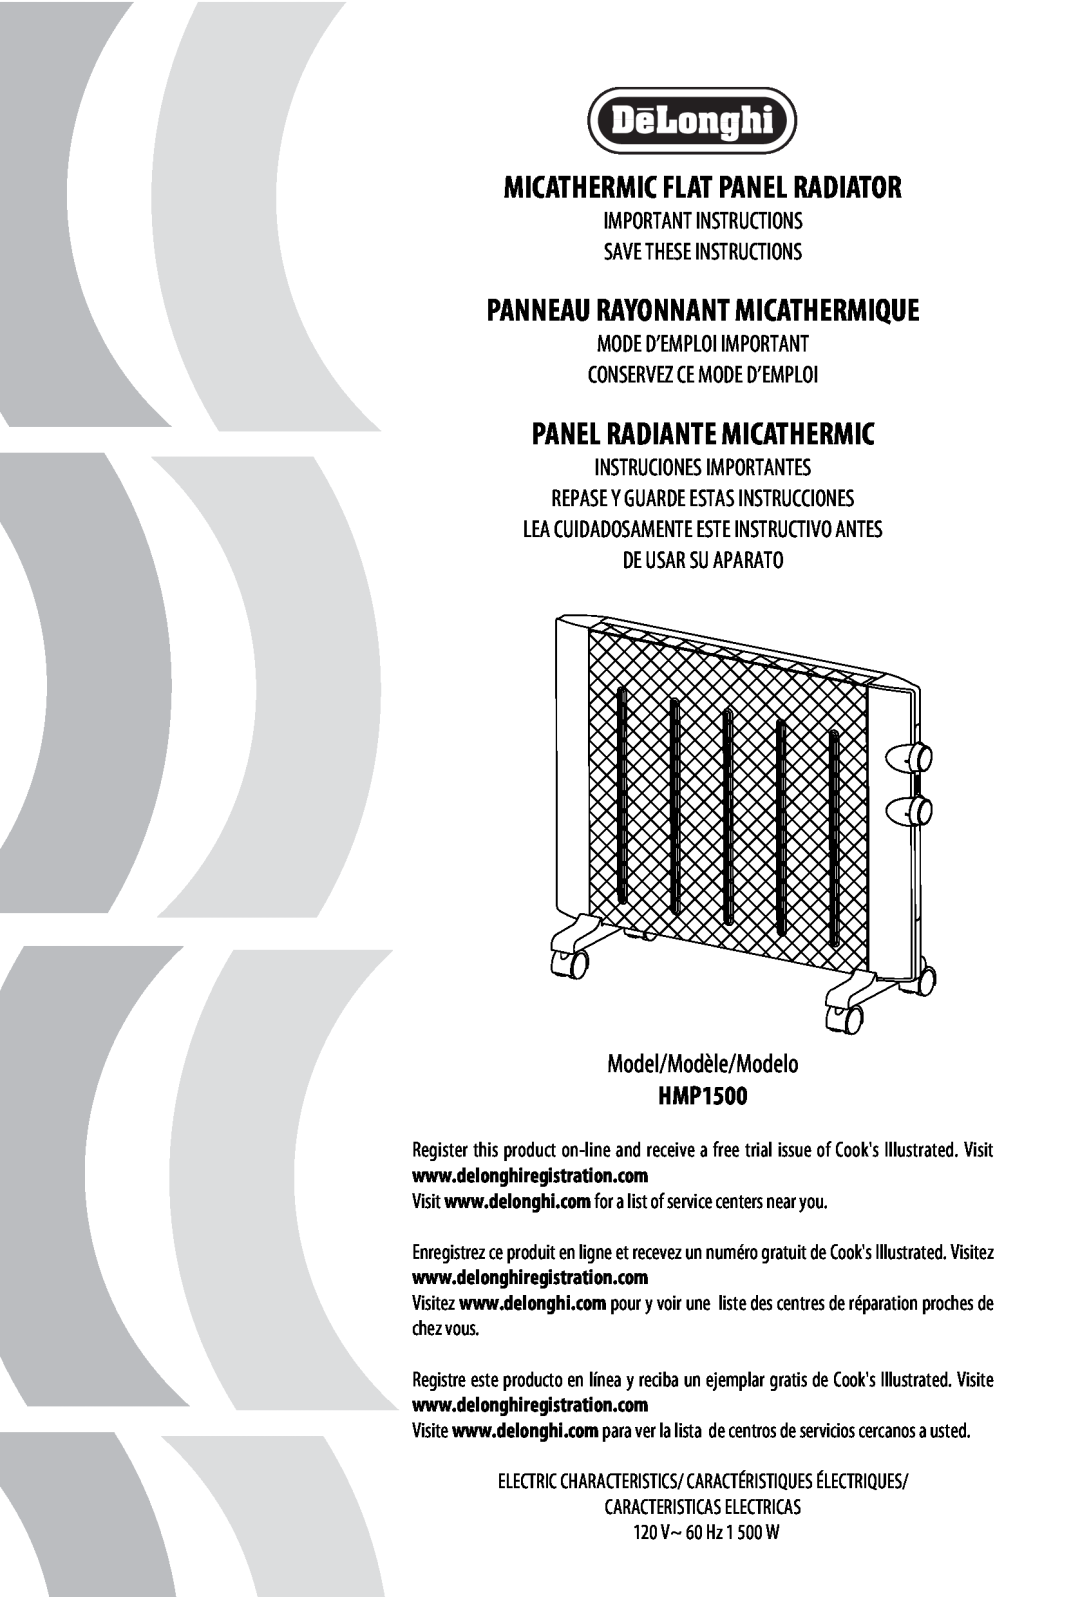 DeLonghi HMP1500 manual Panel Radiante Micathermic, Micathermic Flat Panel Radiator, Panneau Rayonnant Micathermique 